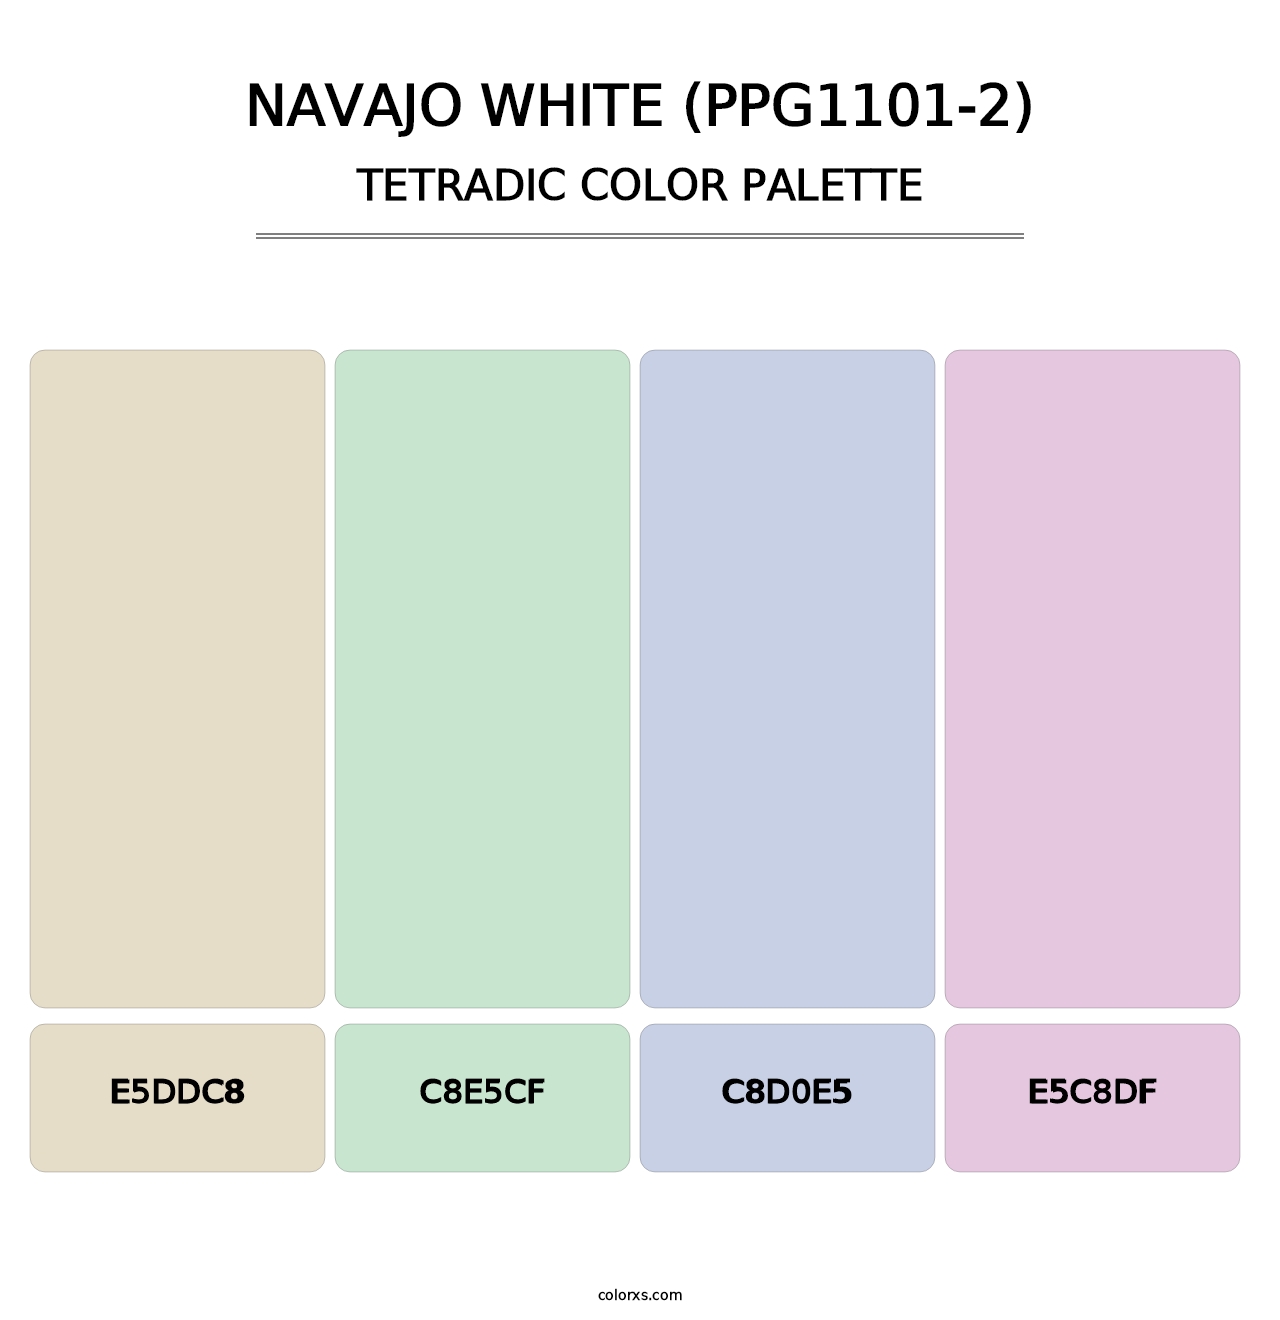 Navajo White (PPG1101-2) - Tetradic Color Palette